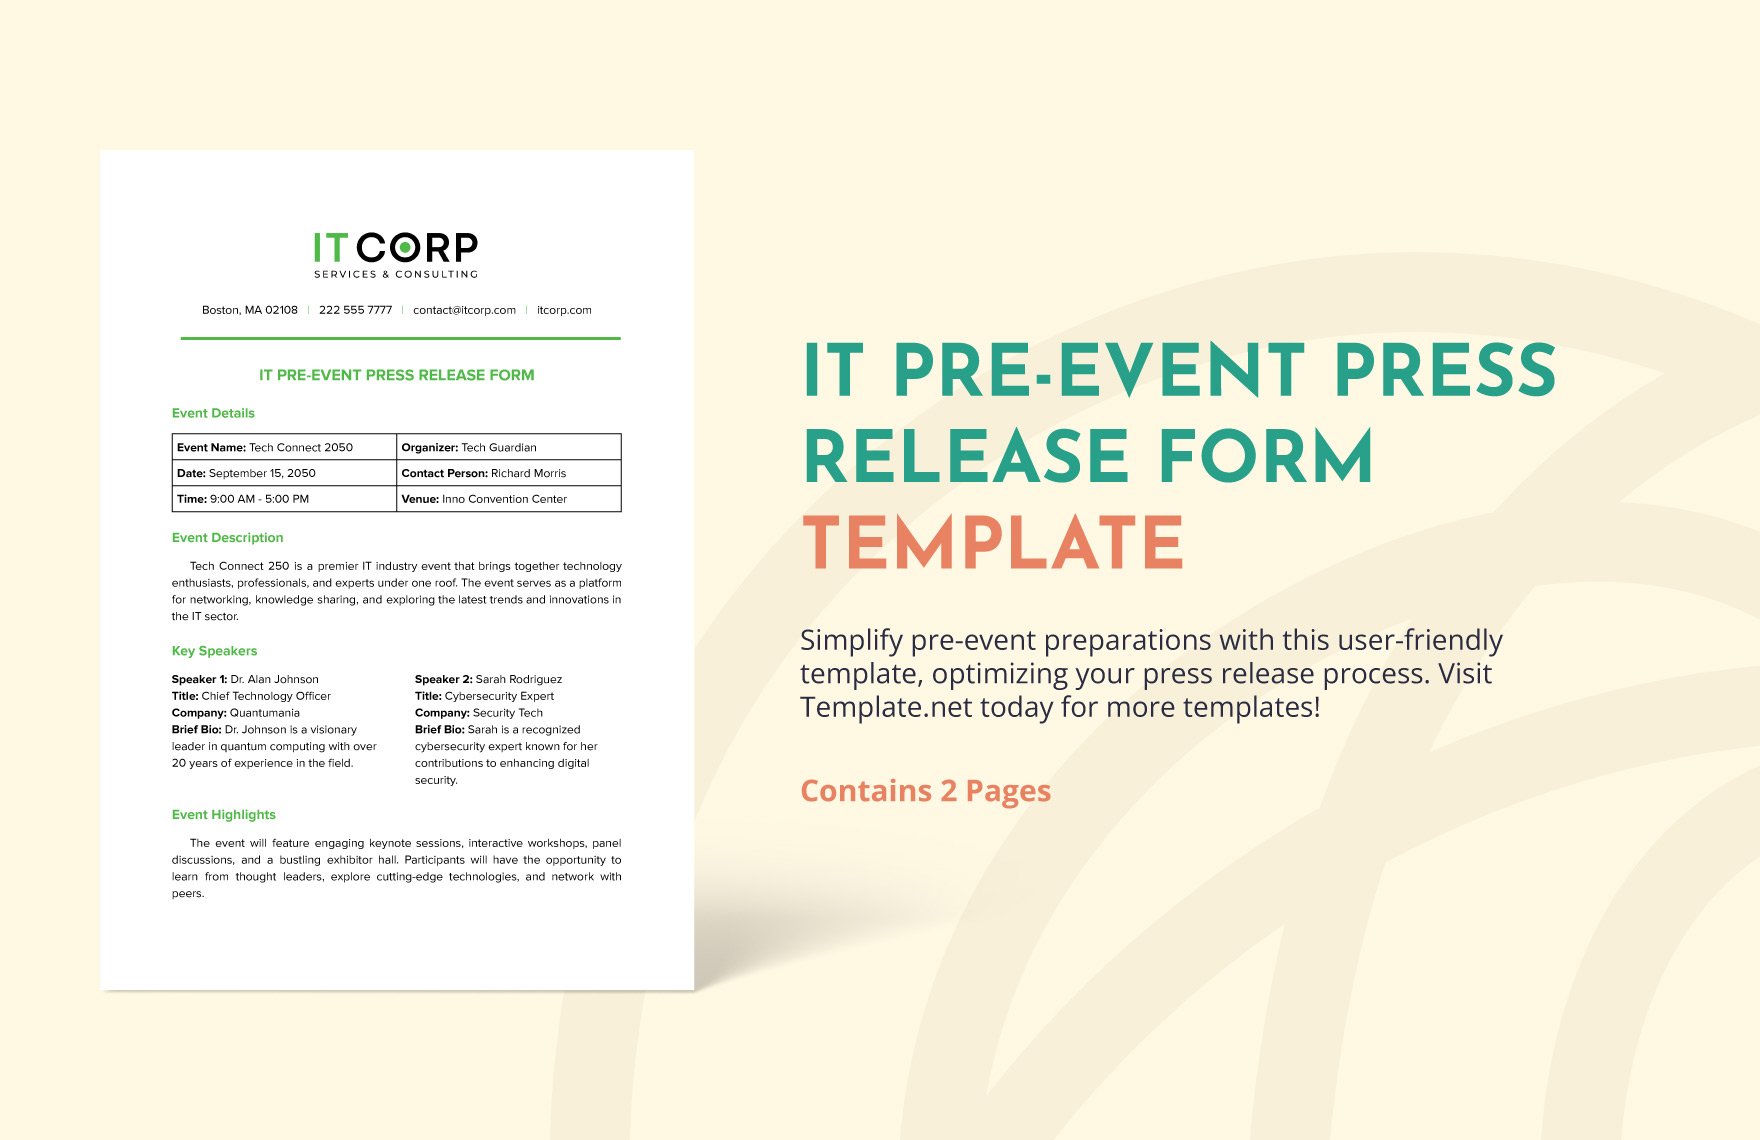 IT Pre-Event Press Release Form Template